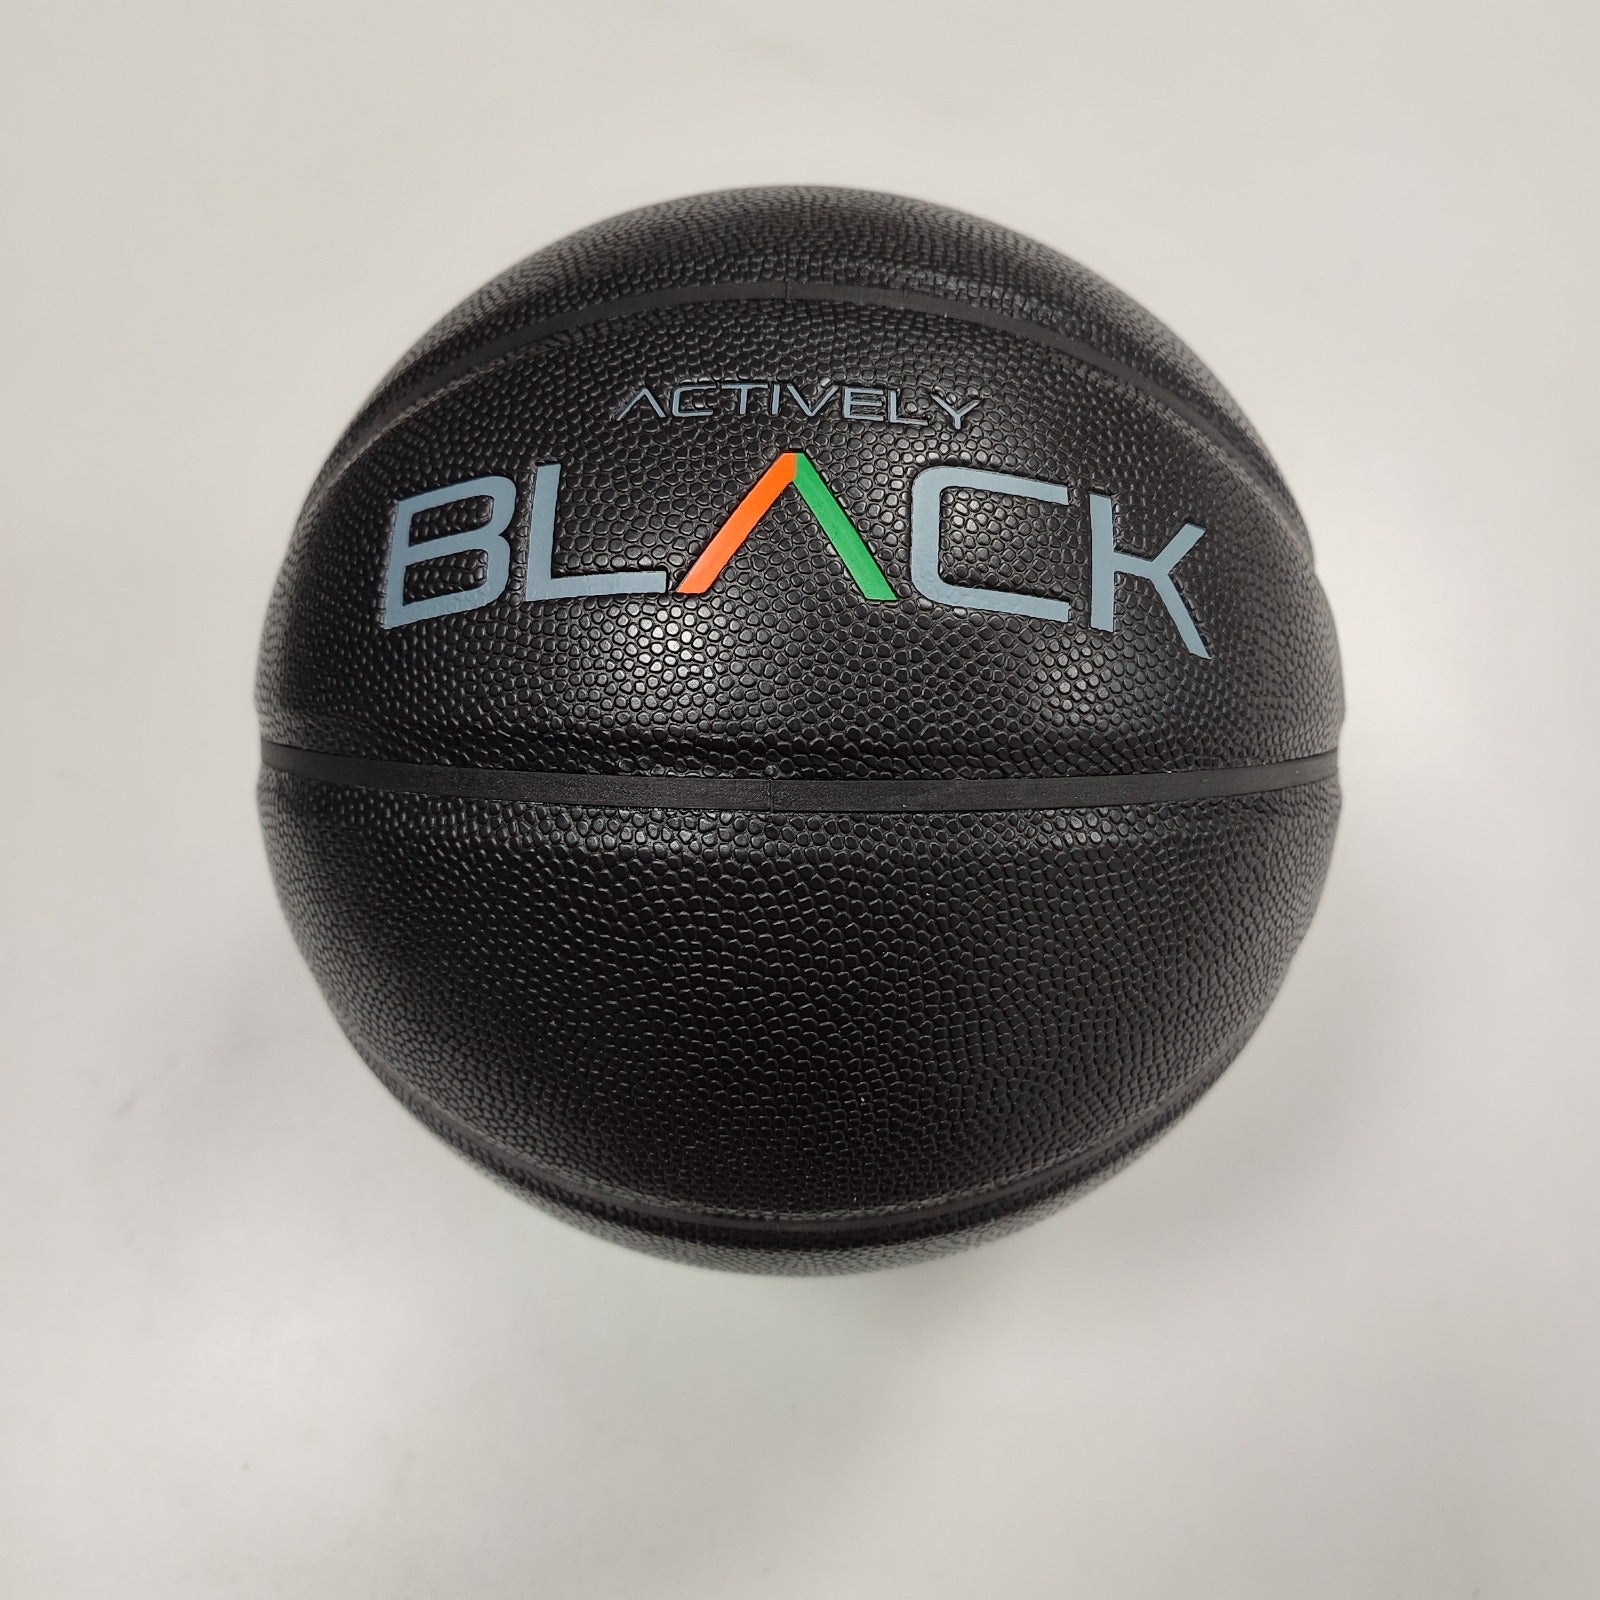 Actively Black Logo Basketball